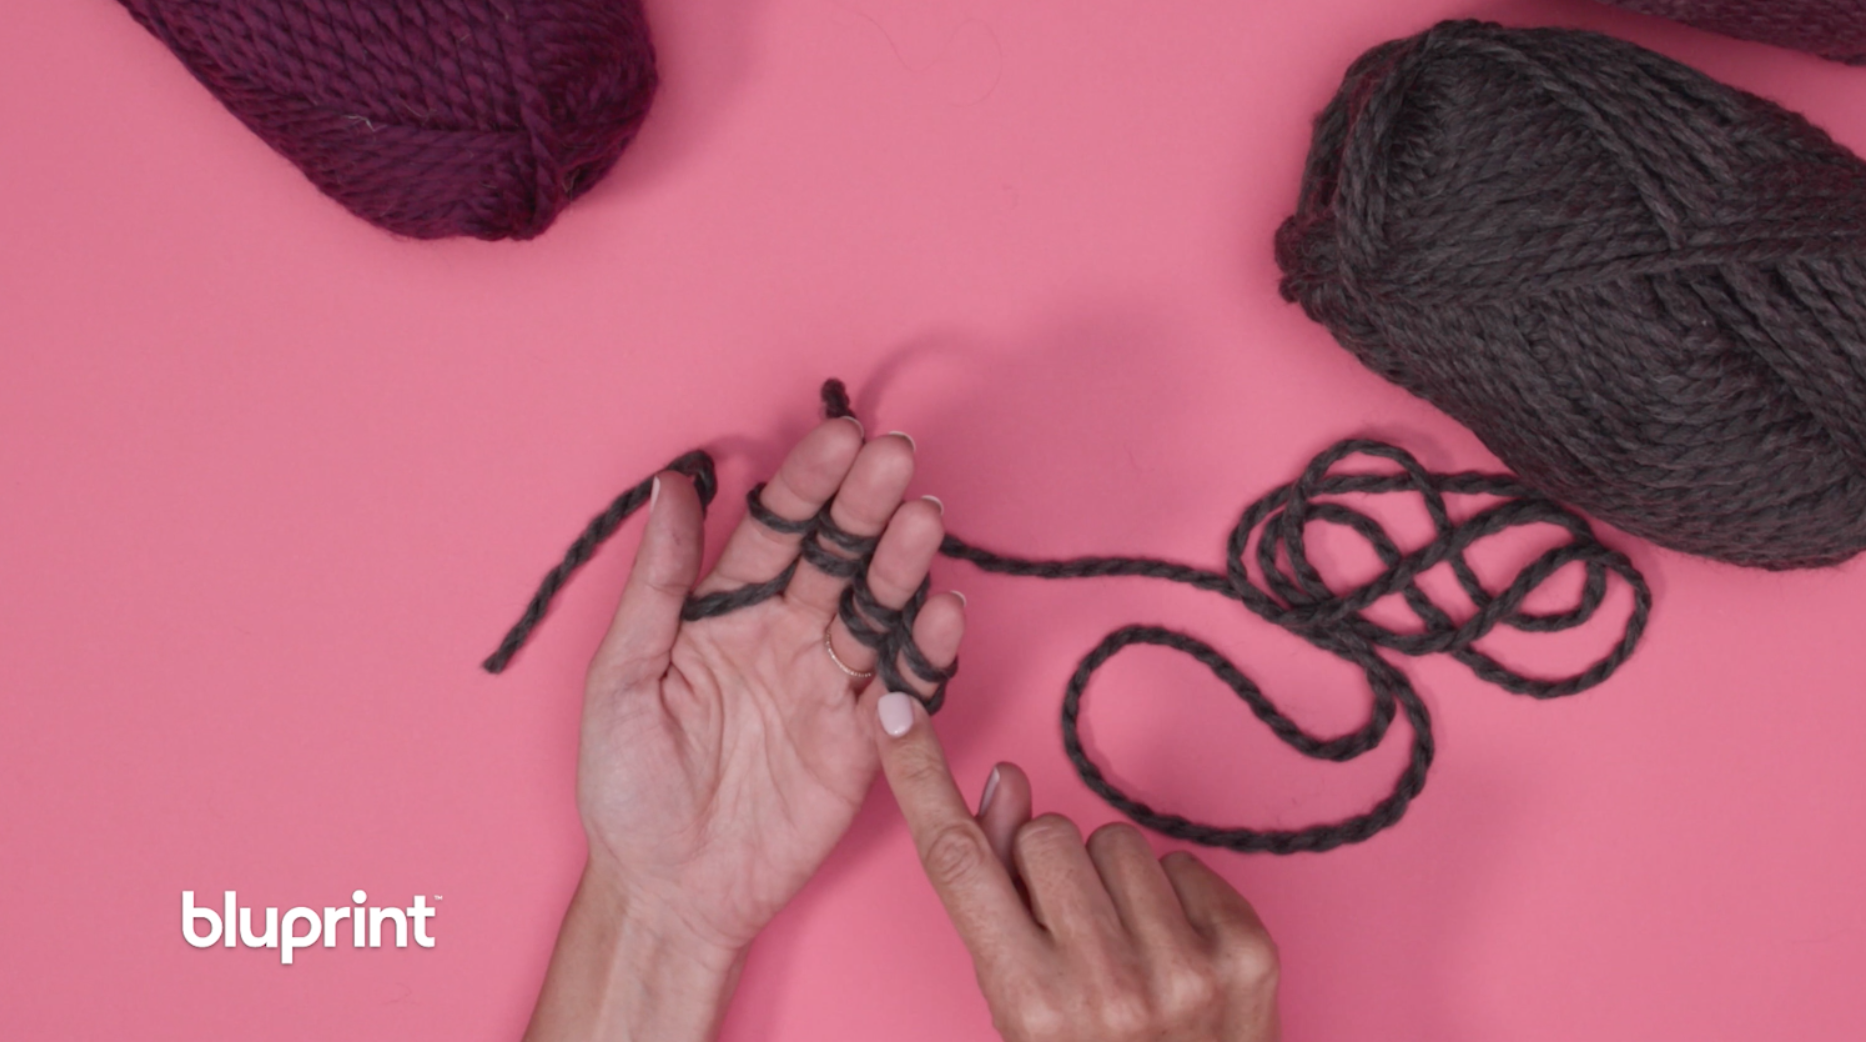 Make THIS: Finger knit a Snug Life rug